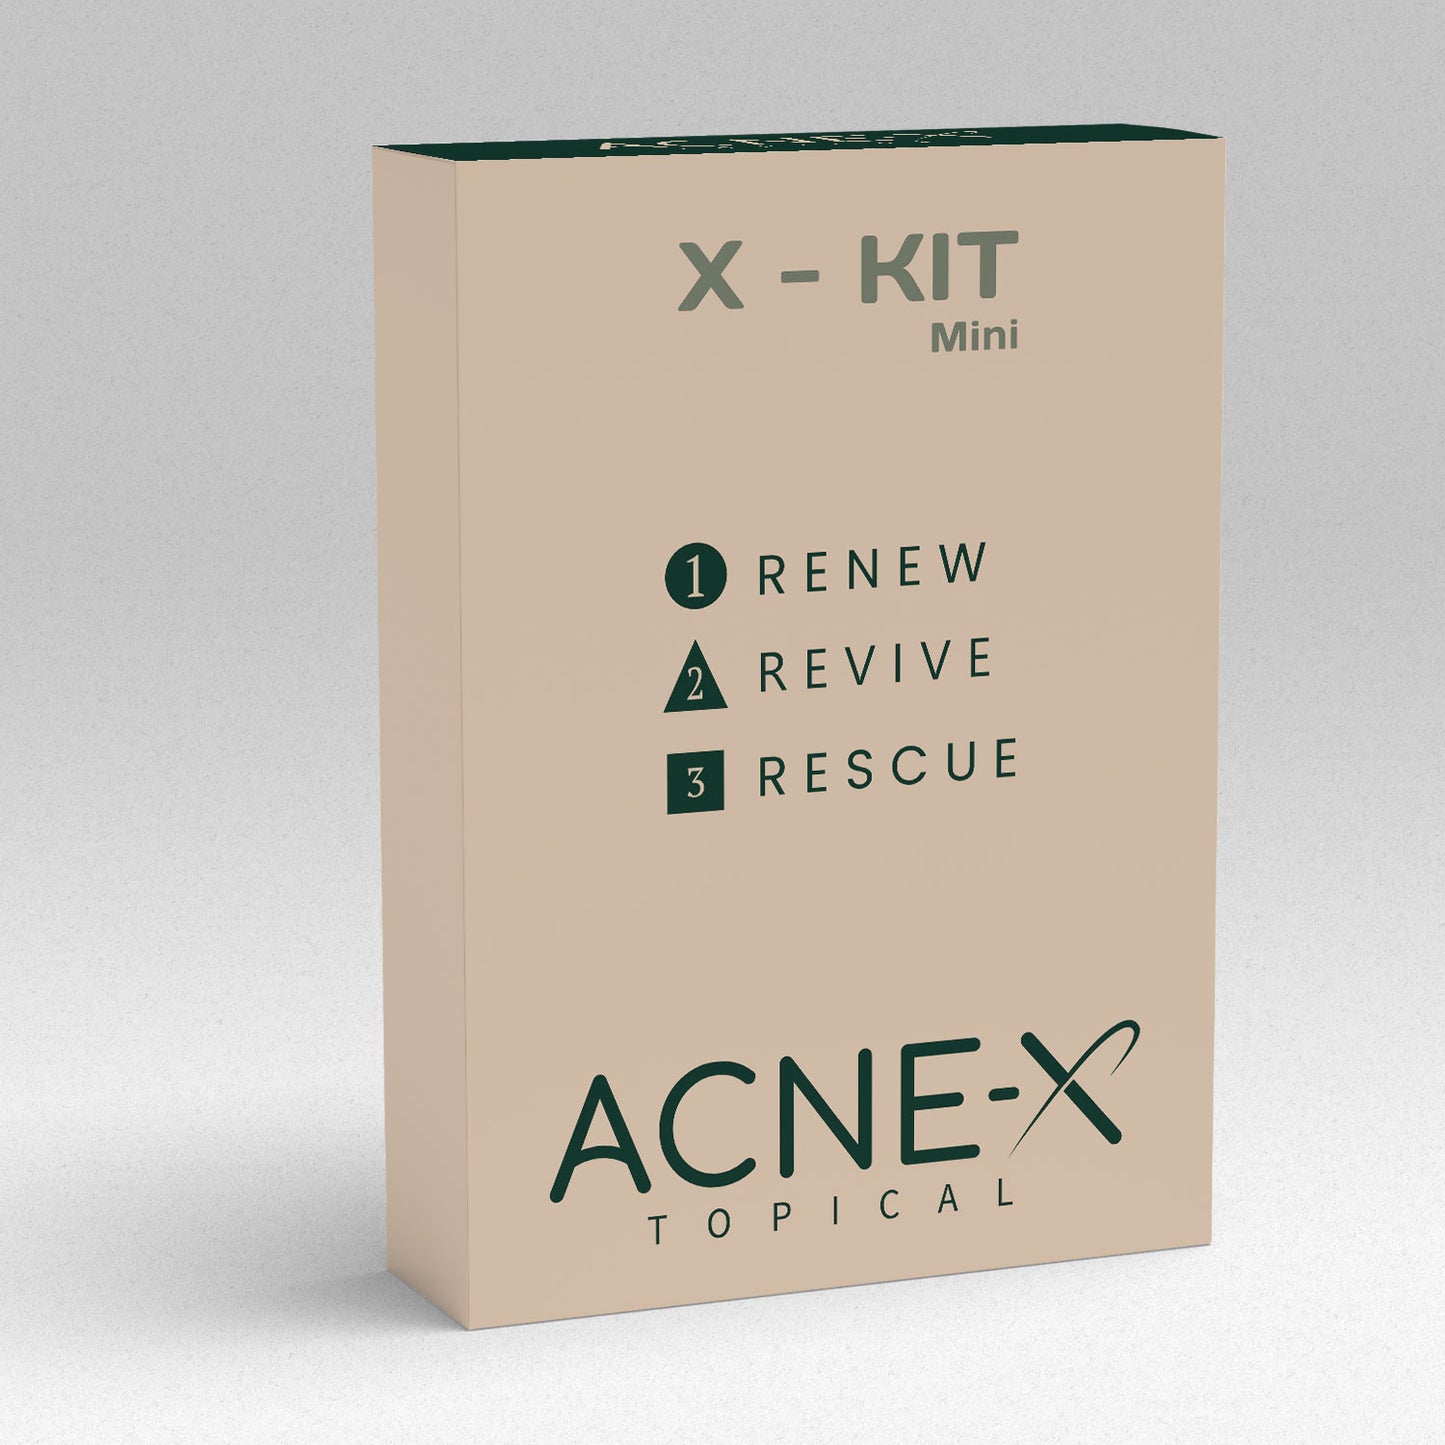 X-KIT Mini: Sample Product - Acne-X Topical